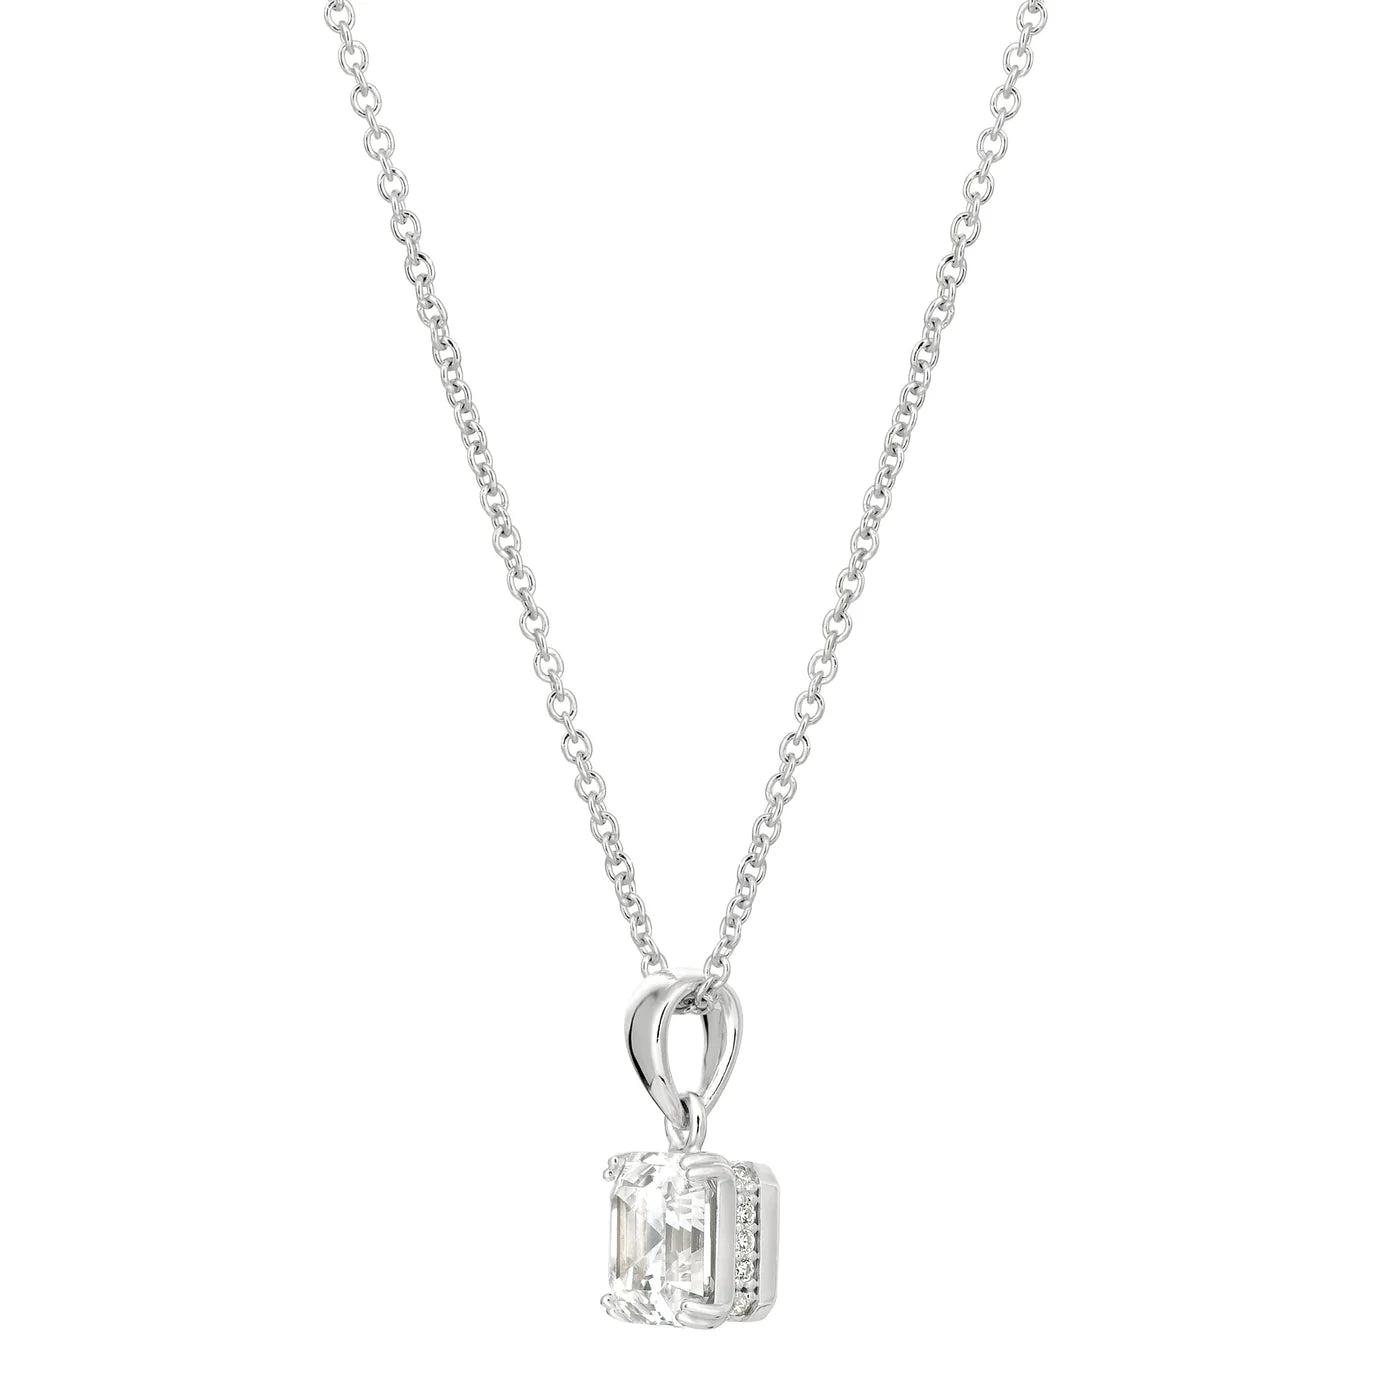 Royal Asscher Cut Pendant Necklace Finished in Pure Platinum